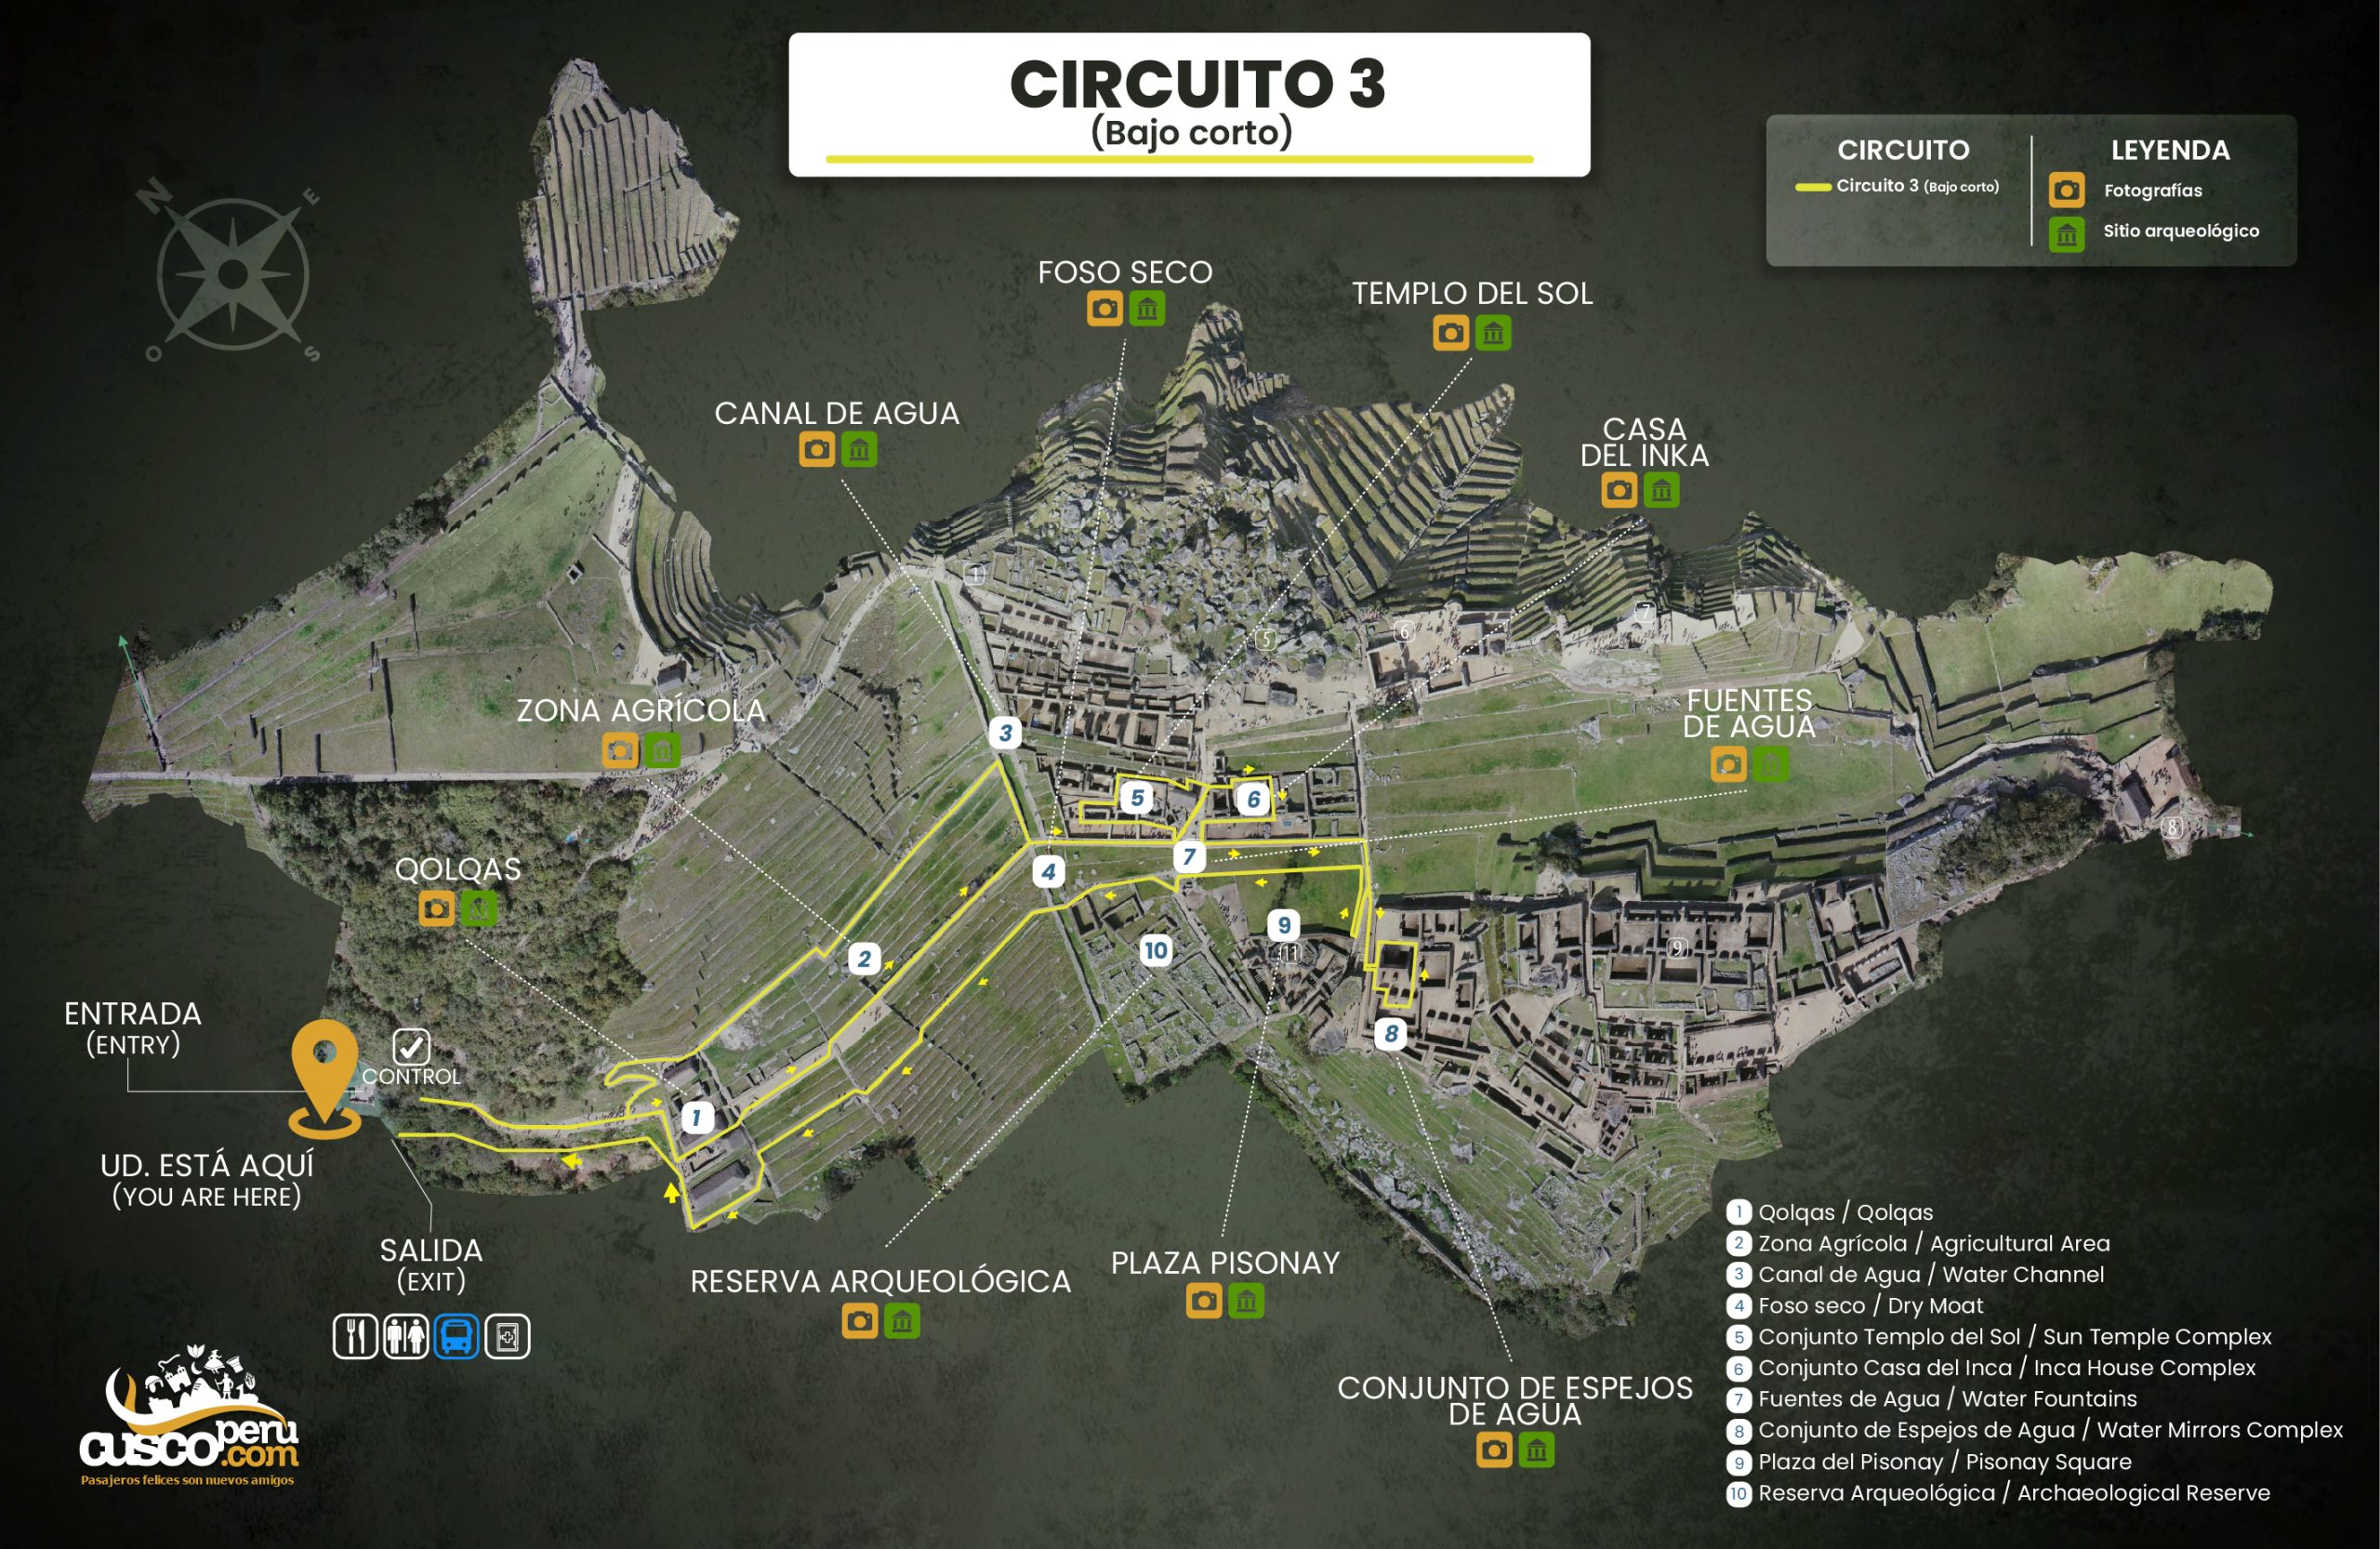 Mapa do circuito 3 em Machu Picchu. Fonte: CuscoPeru.com